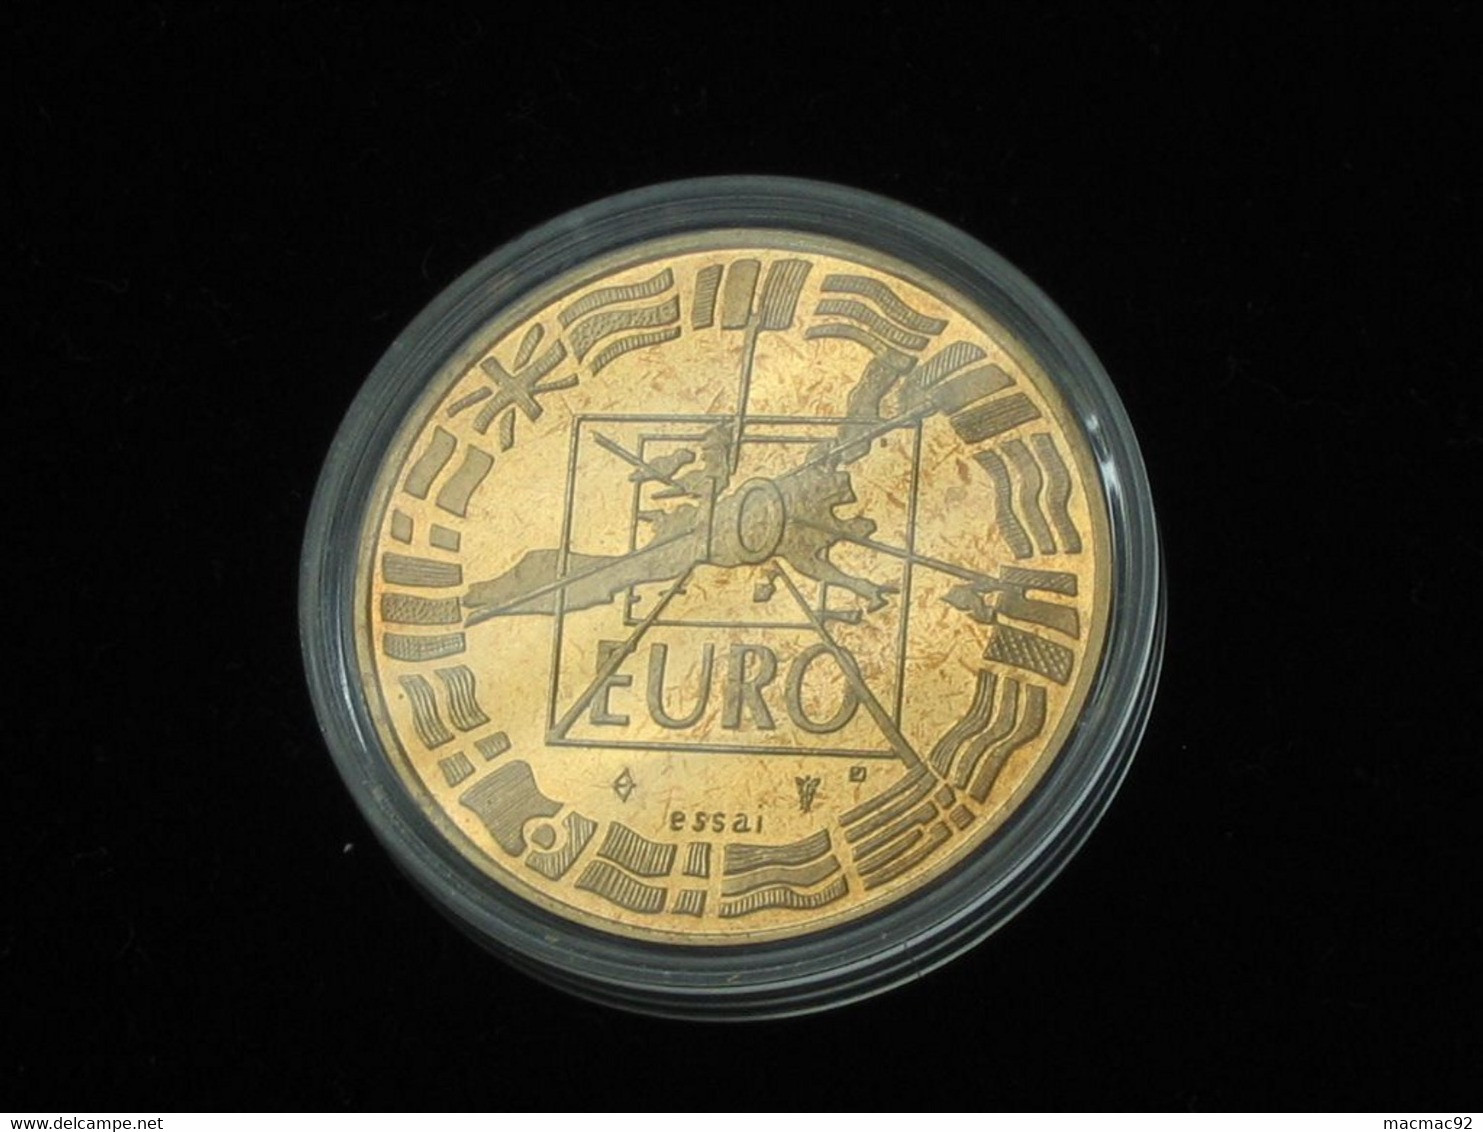 Essai De 10 Euros 1998 - De Gaulle - Adenauer  **** EN ACHAT IMMEDIAT **** - Euros Of The Cities